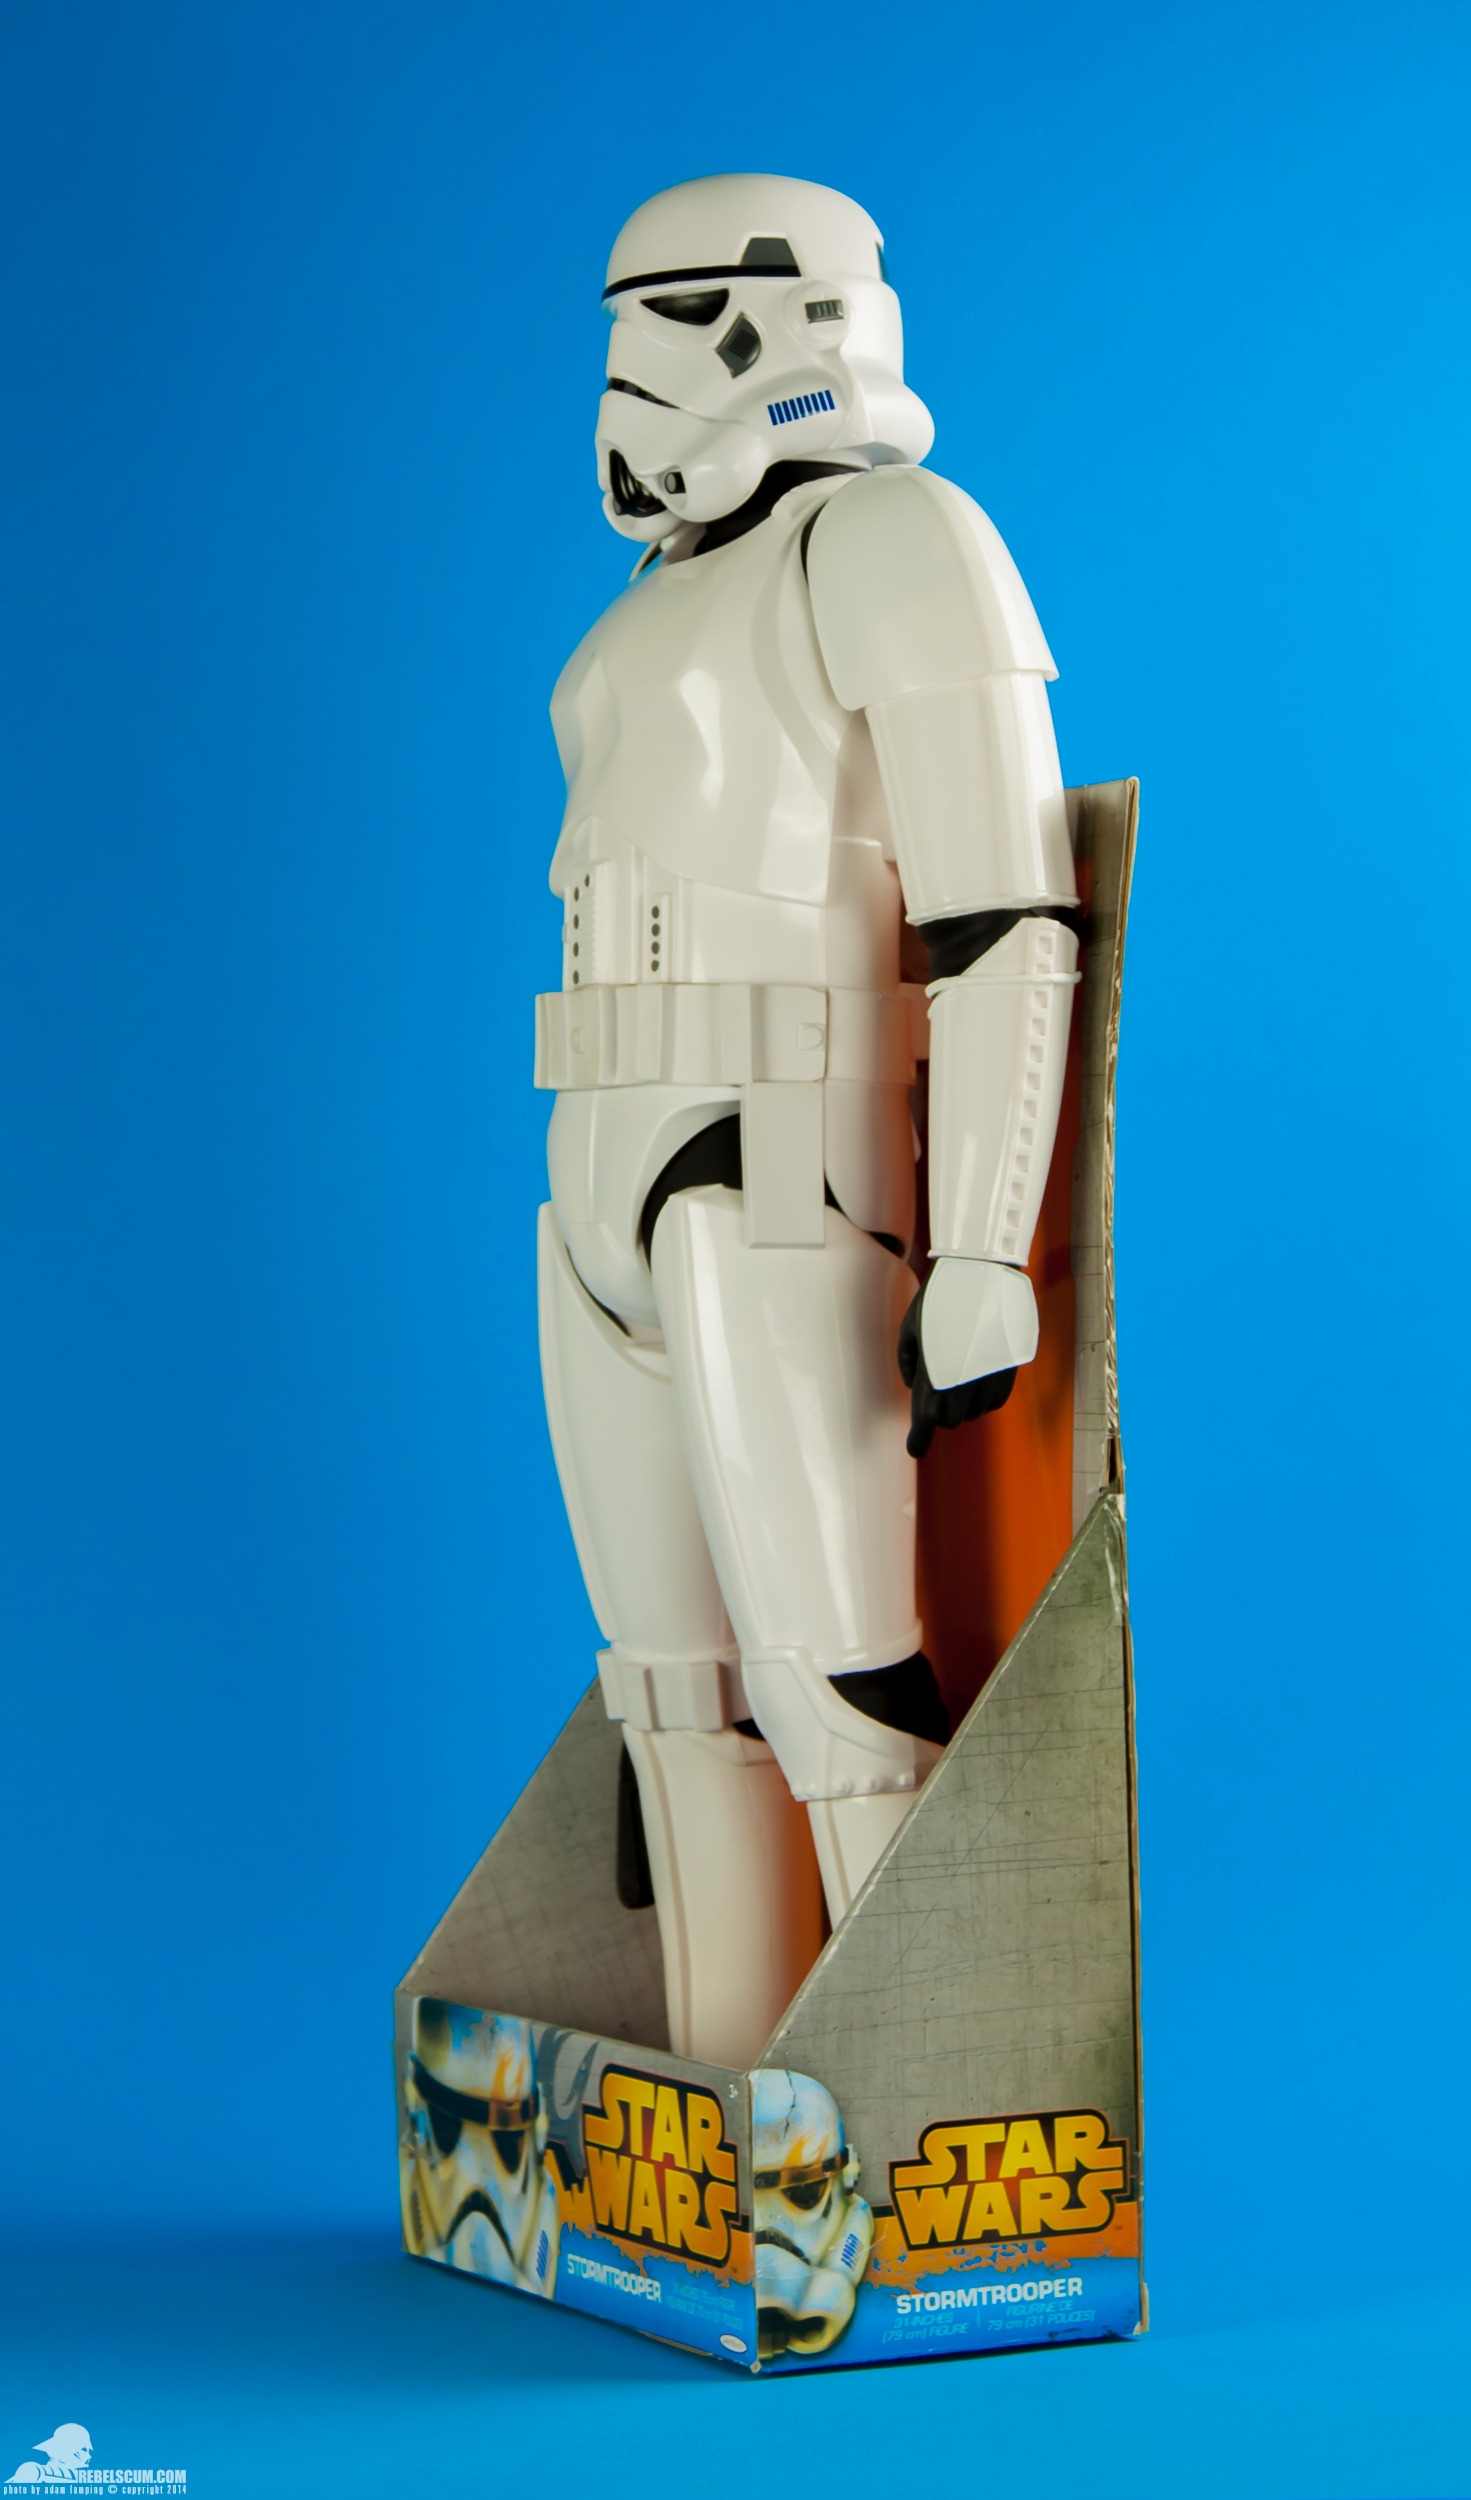 31-inch-Stormtrooper-Star-Wars-JAKKS-Pacific-012.jpg